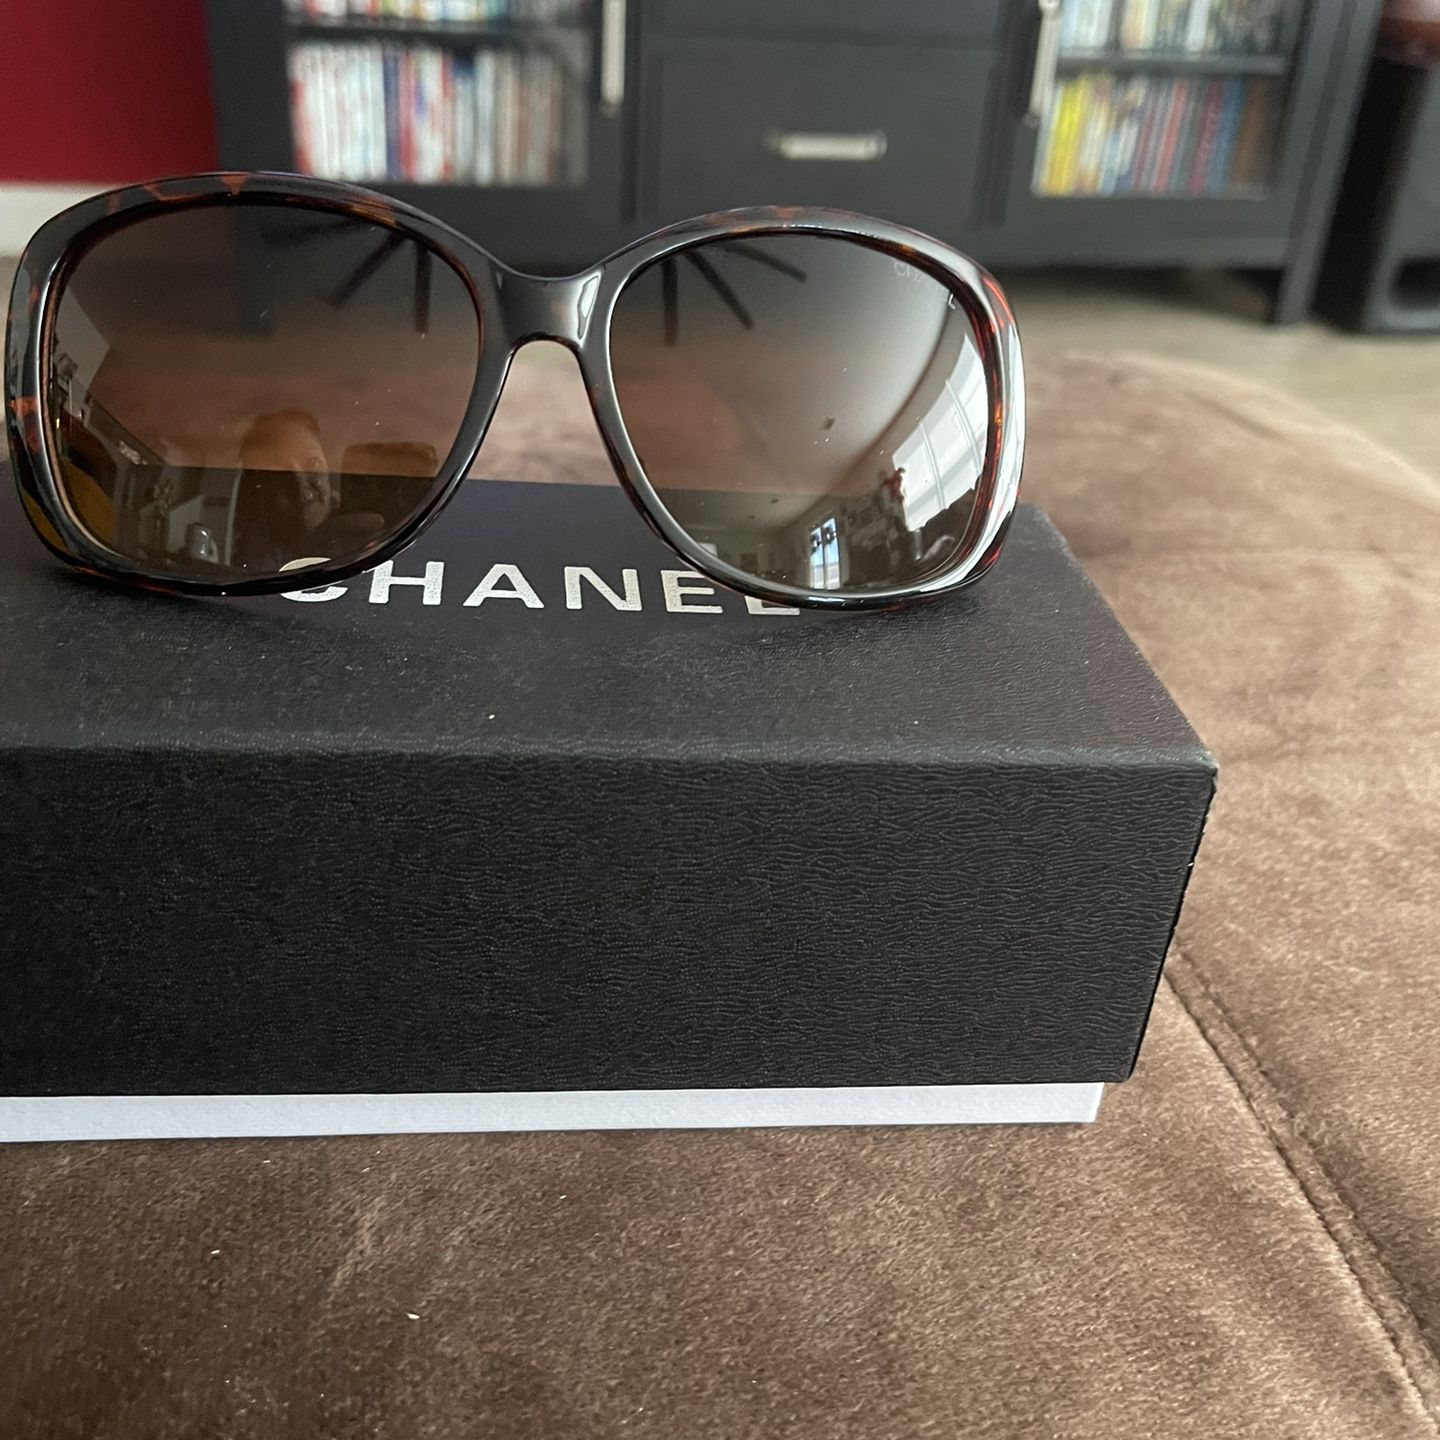 New Chanel Pearl Tortoise Sunglasses for Sale in Crestview, FL